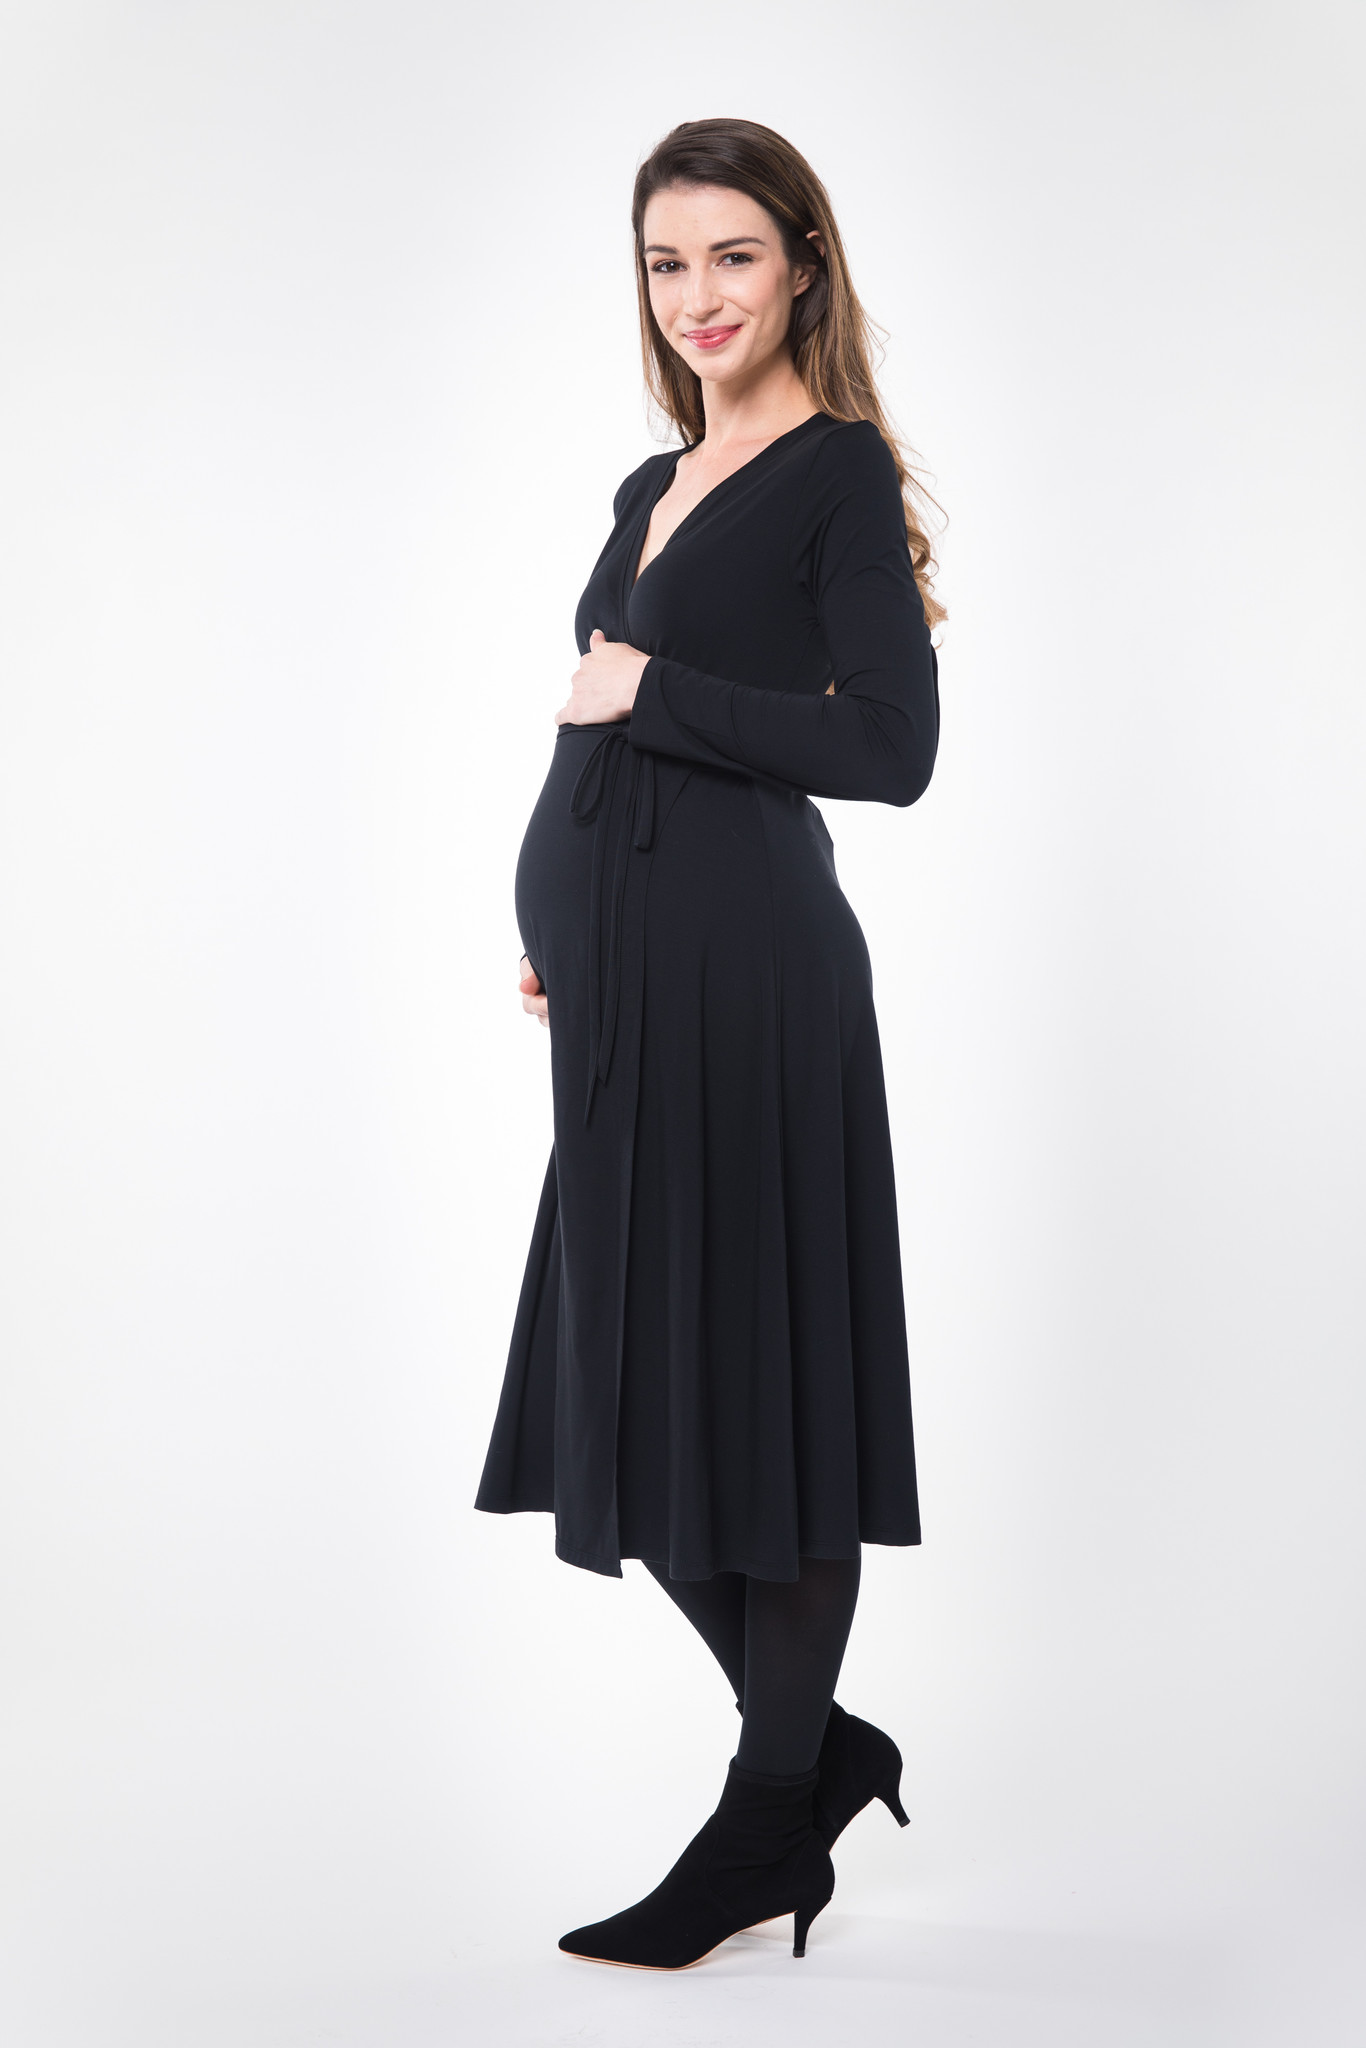 NOM Maternity Tessa Wrap Dress - Black